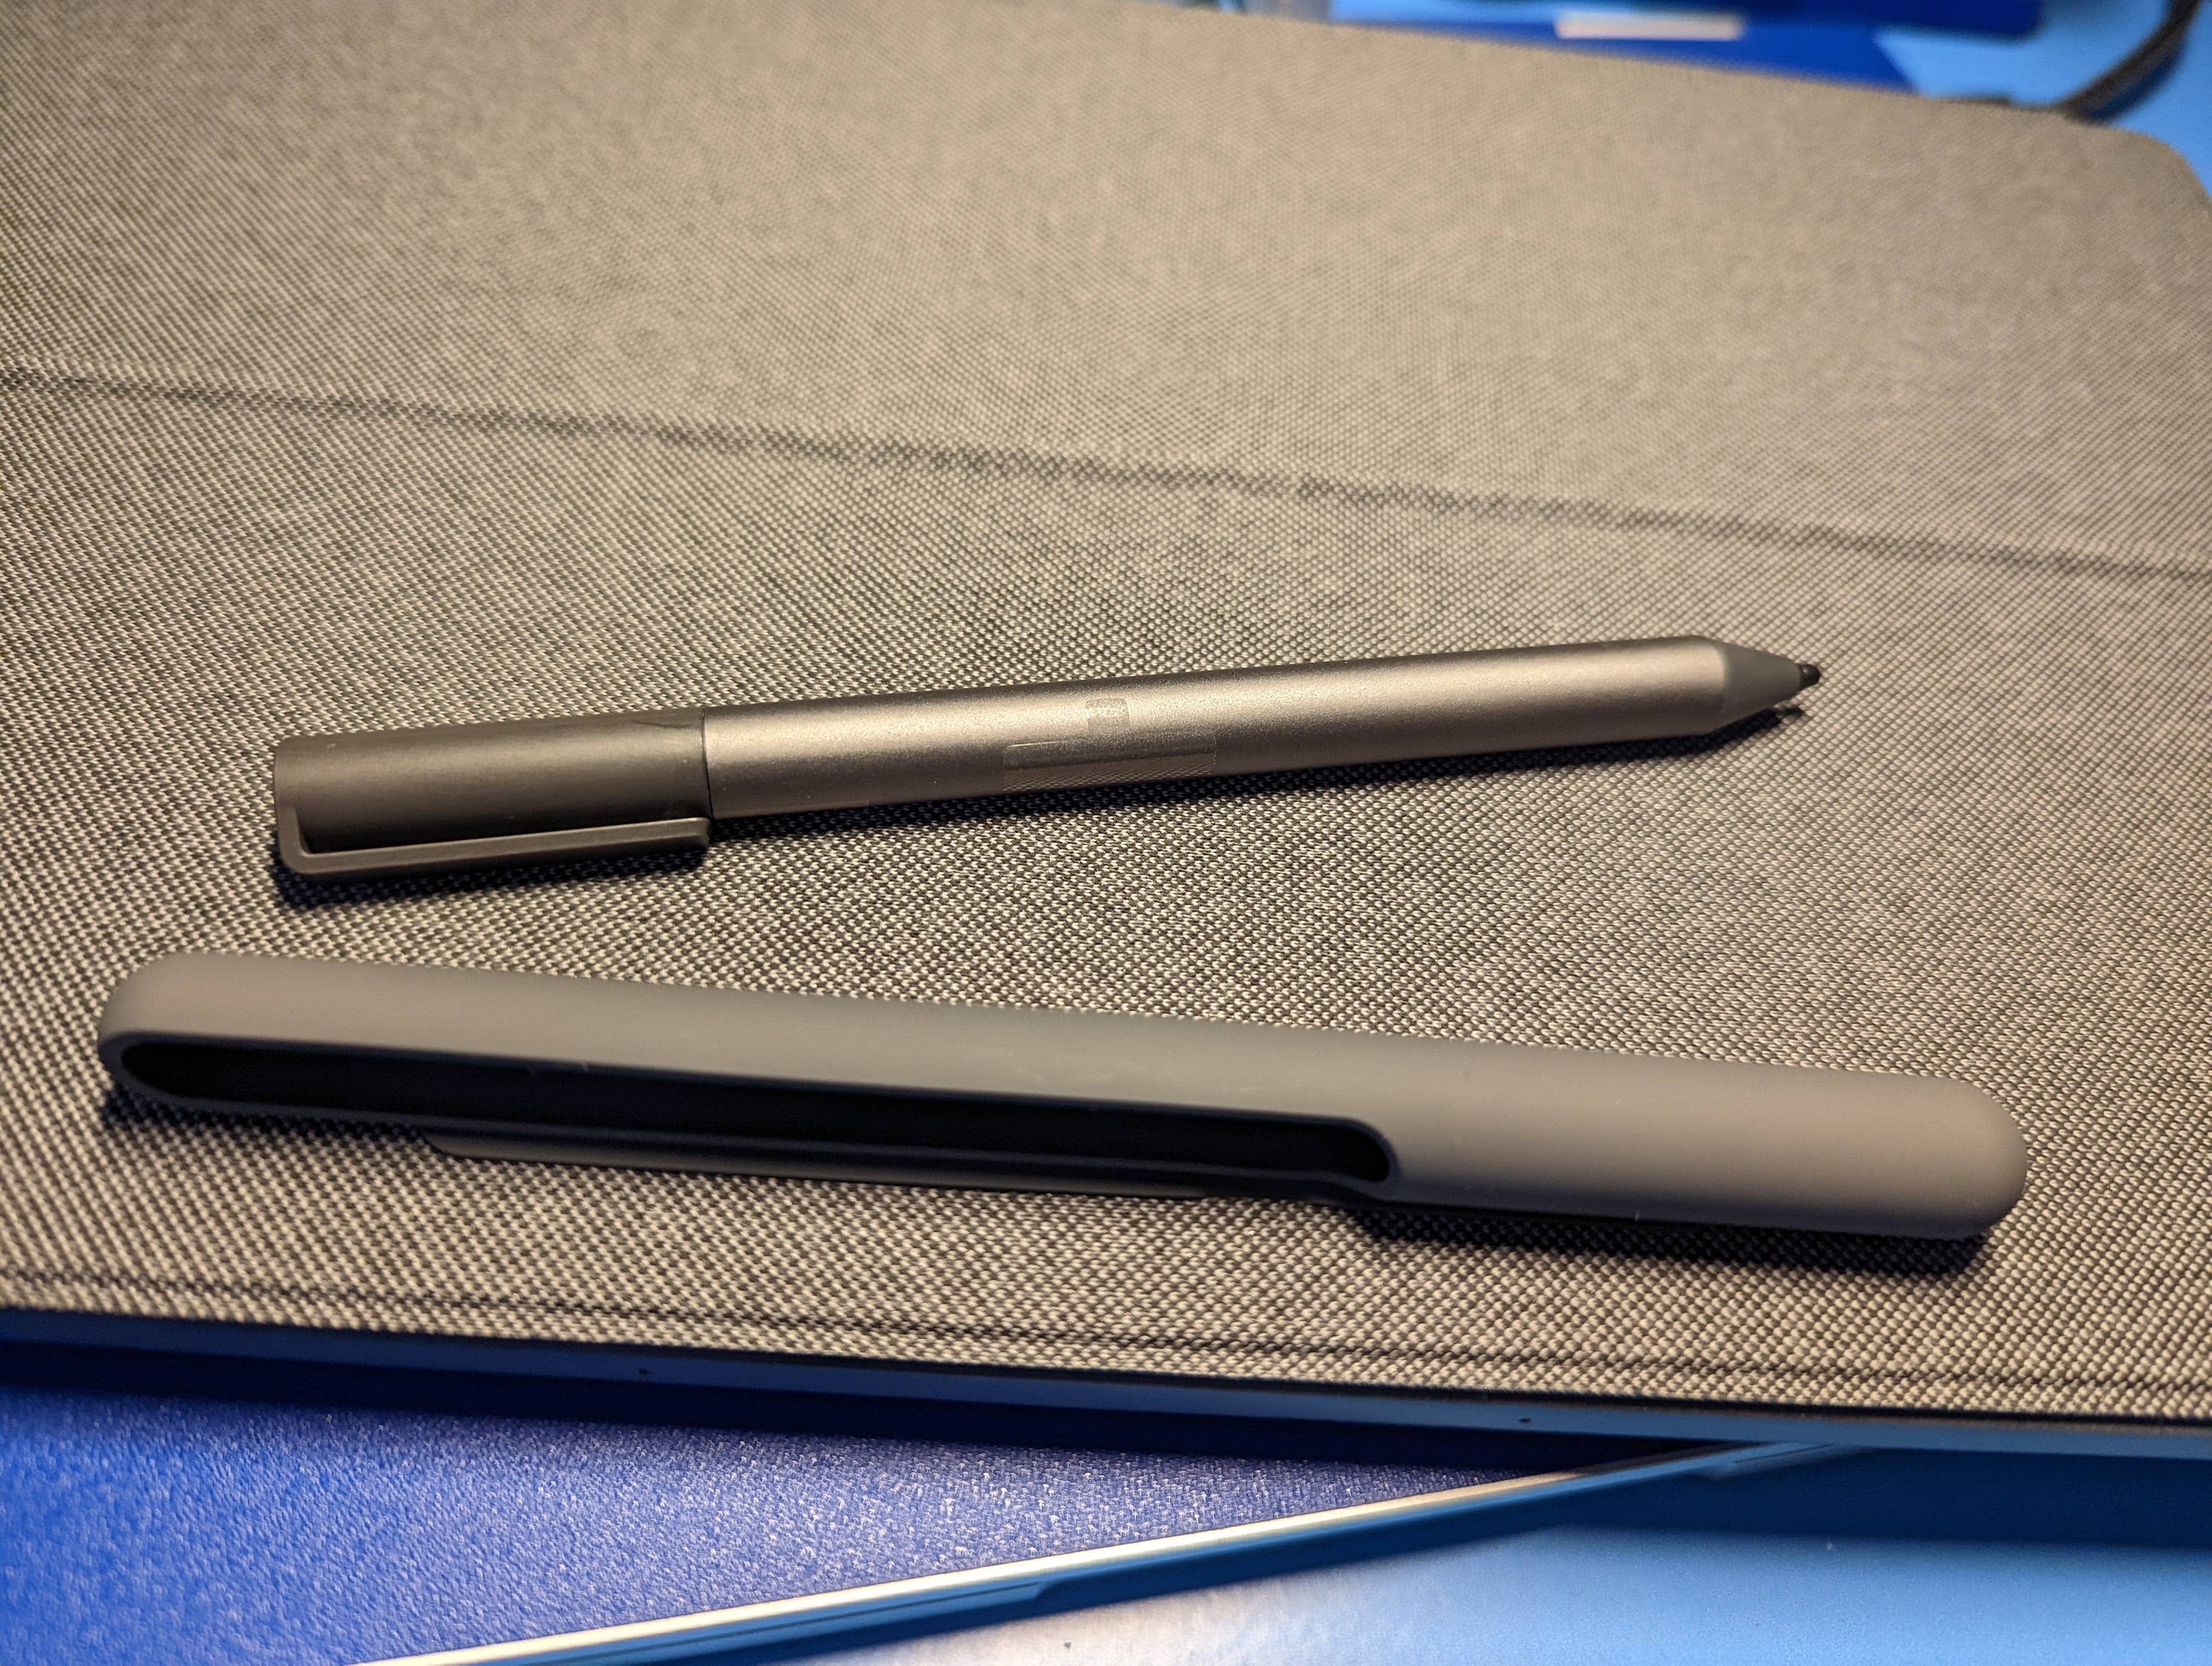 Here's How Duet 5's Pen Looks Like | onchrome